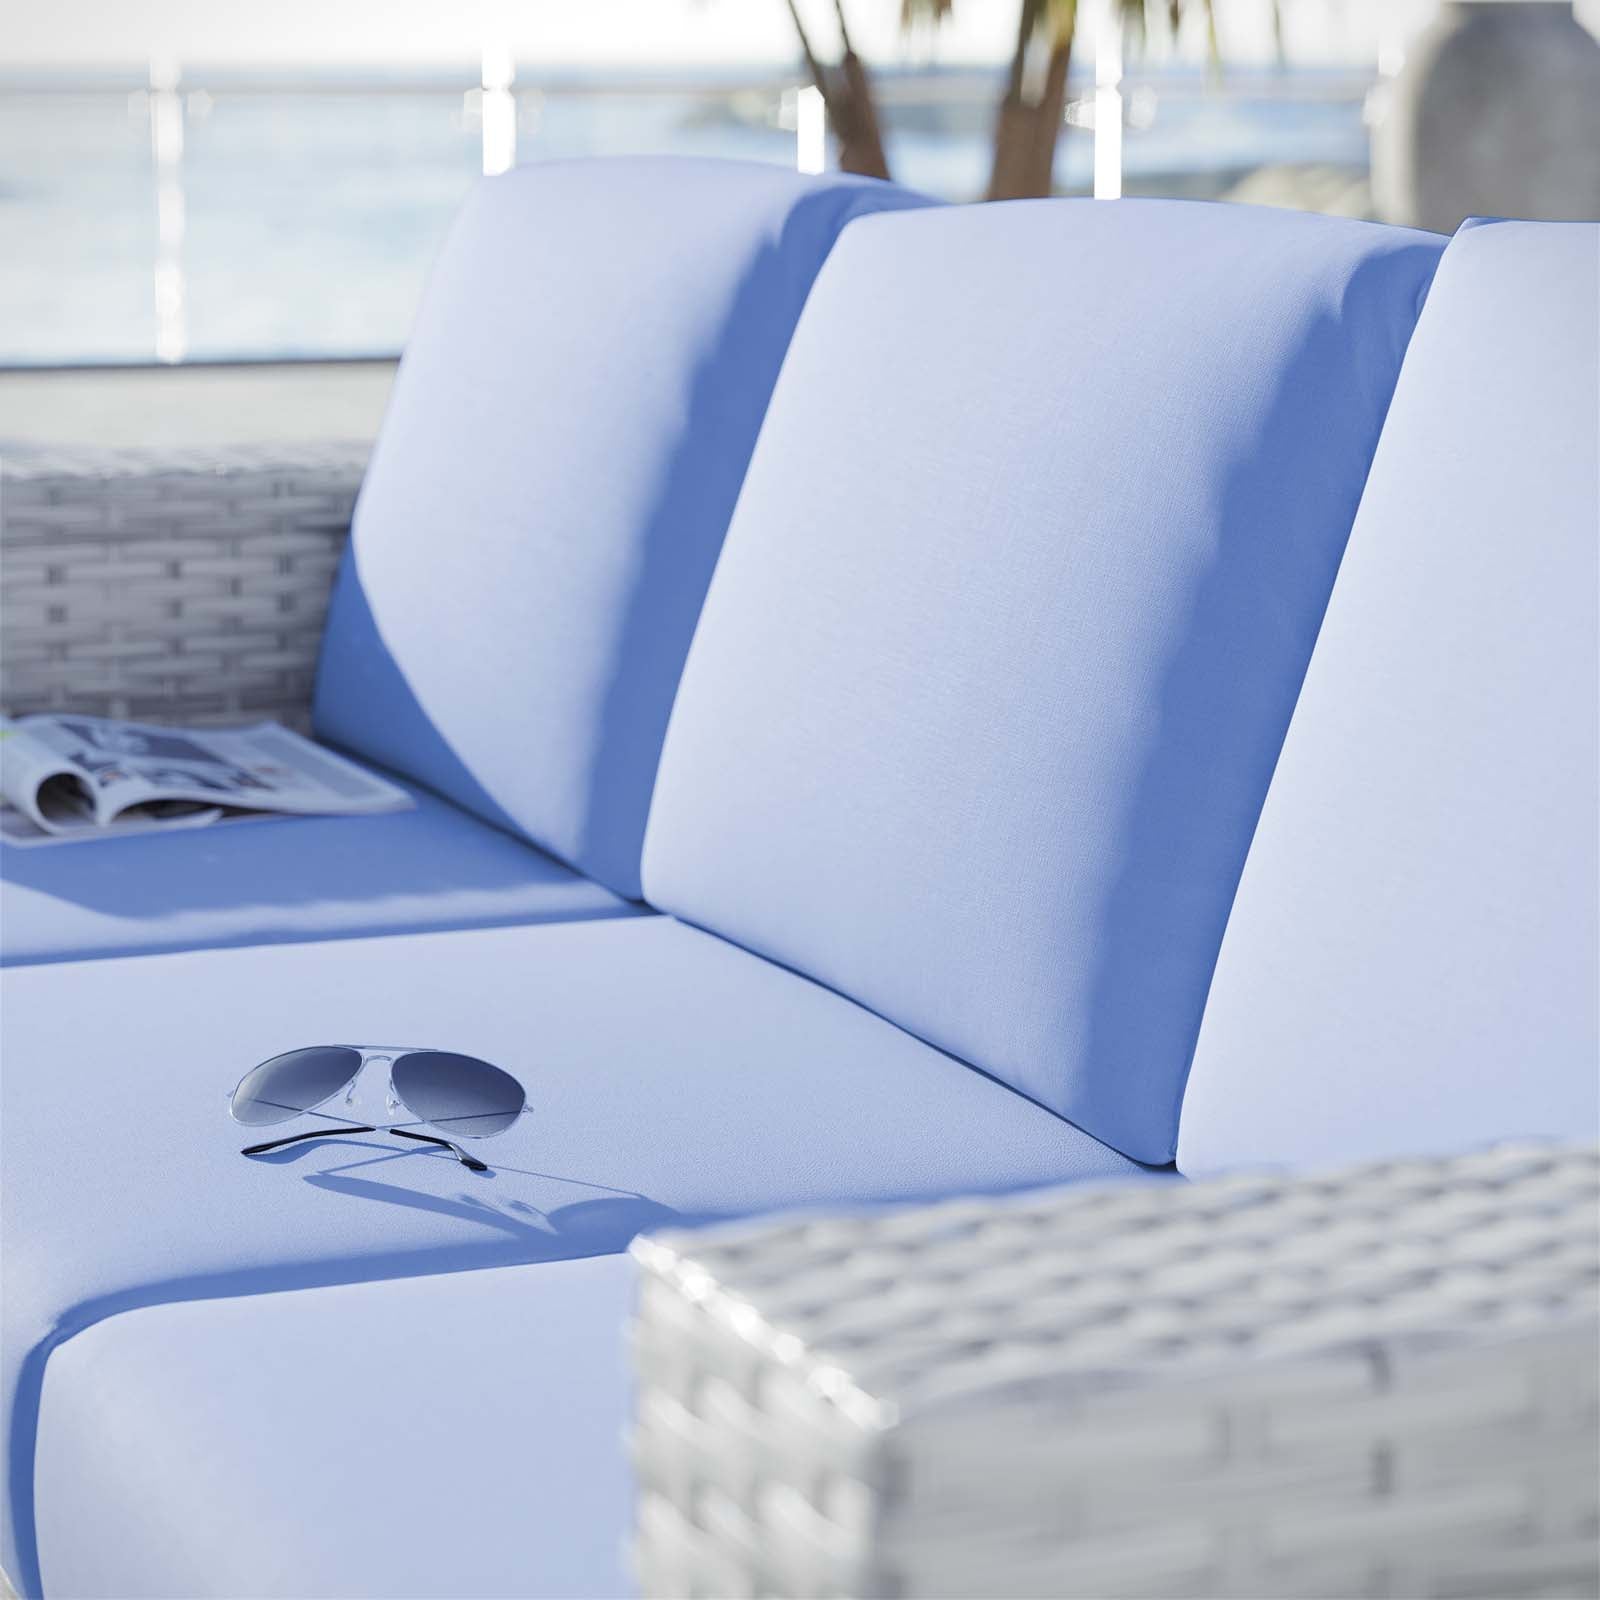 Modway Outdoor Sofas - Convene Outdoor Patio Sofa Light Gray Light Blue